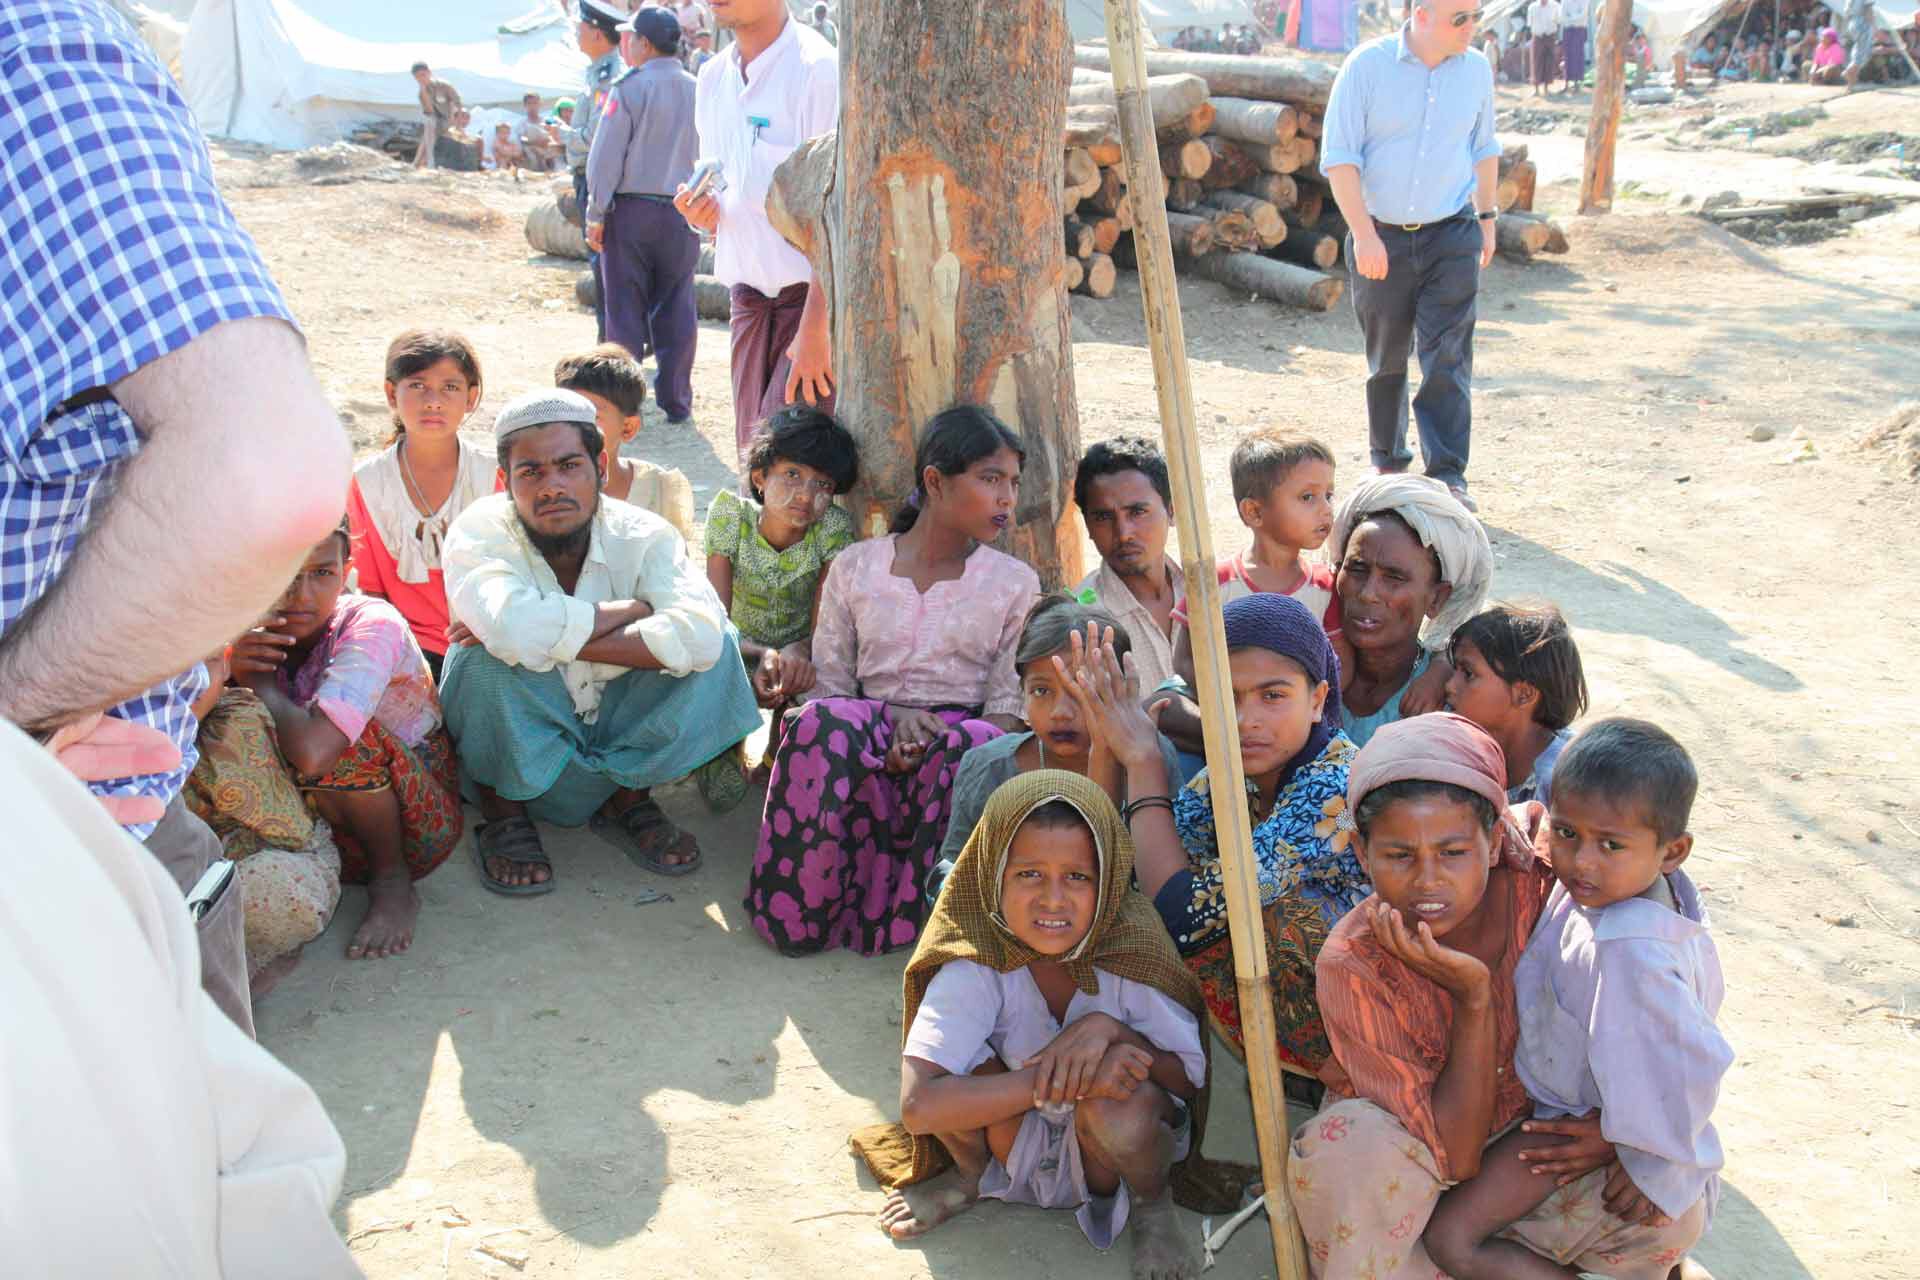 Réfugiés Rohingyas dans l’État d’Arakan, subdivision administrative de Birmanie.